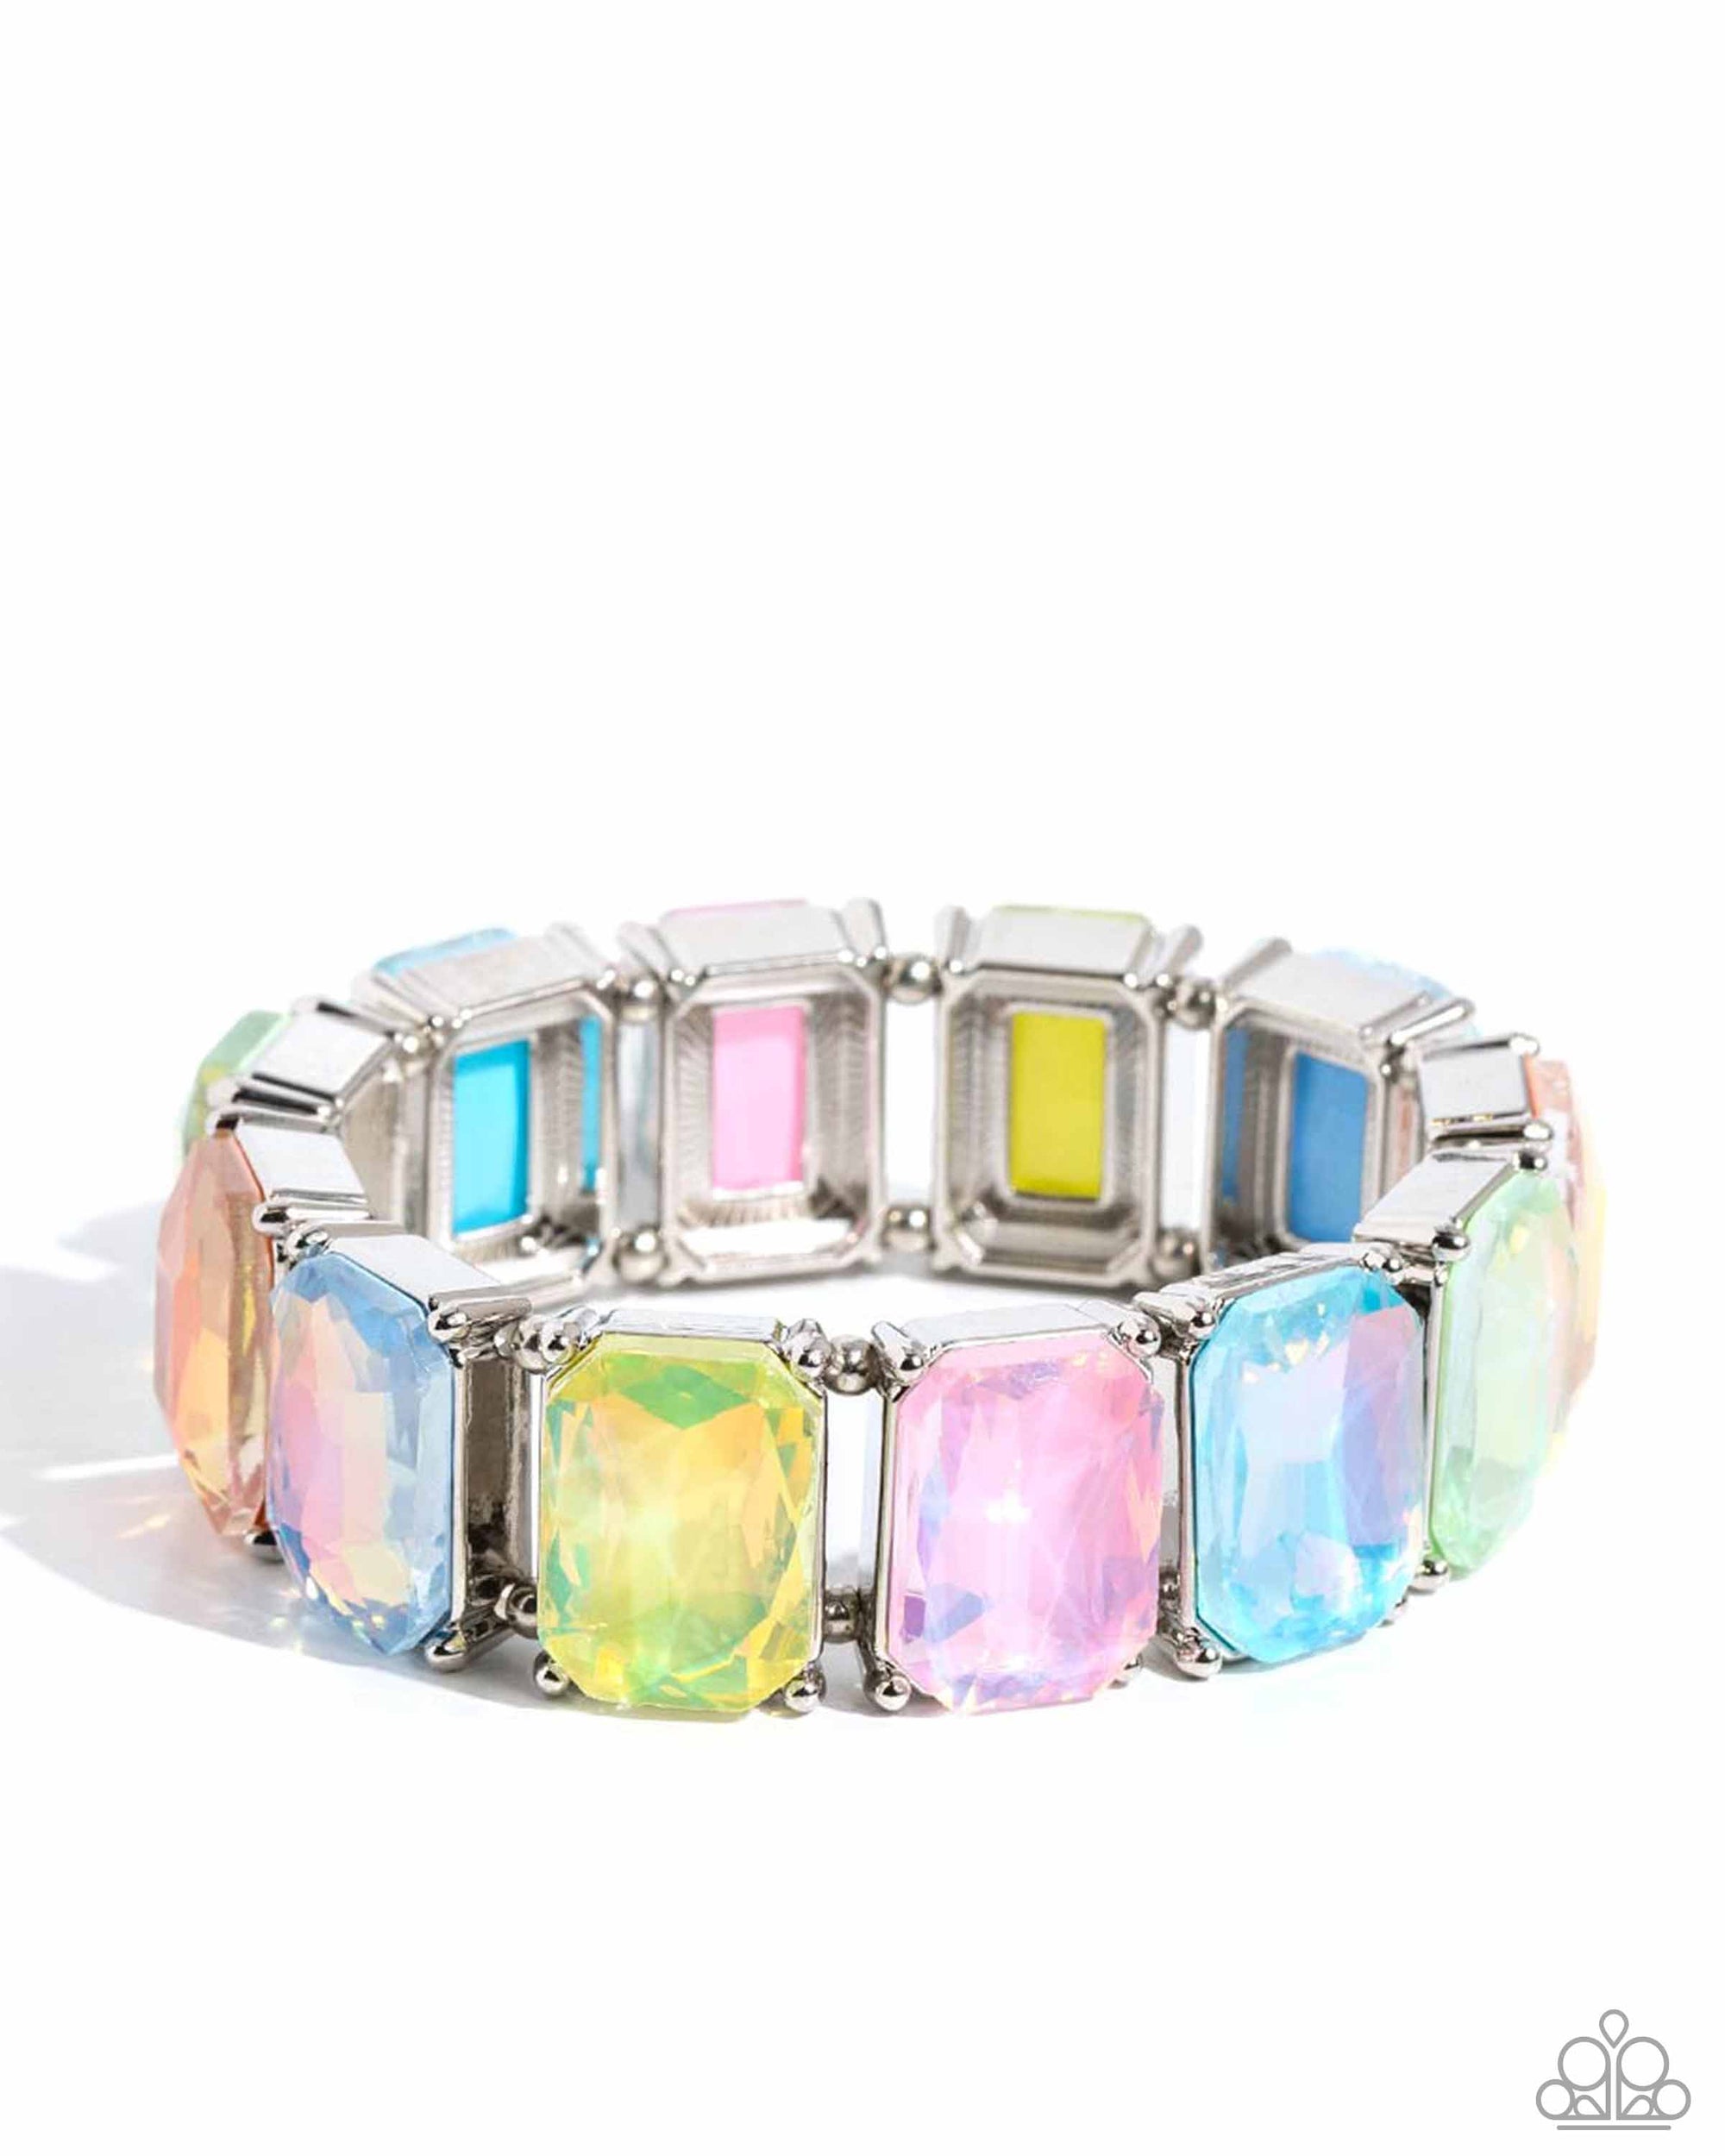 Glamorous Getaway Multi Rhinestone Bracelet - Paparazzi Accessories- lightbox - CarasShop.com - $5 Jewelry by Cara Jewels